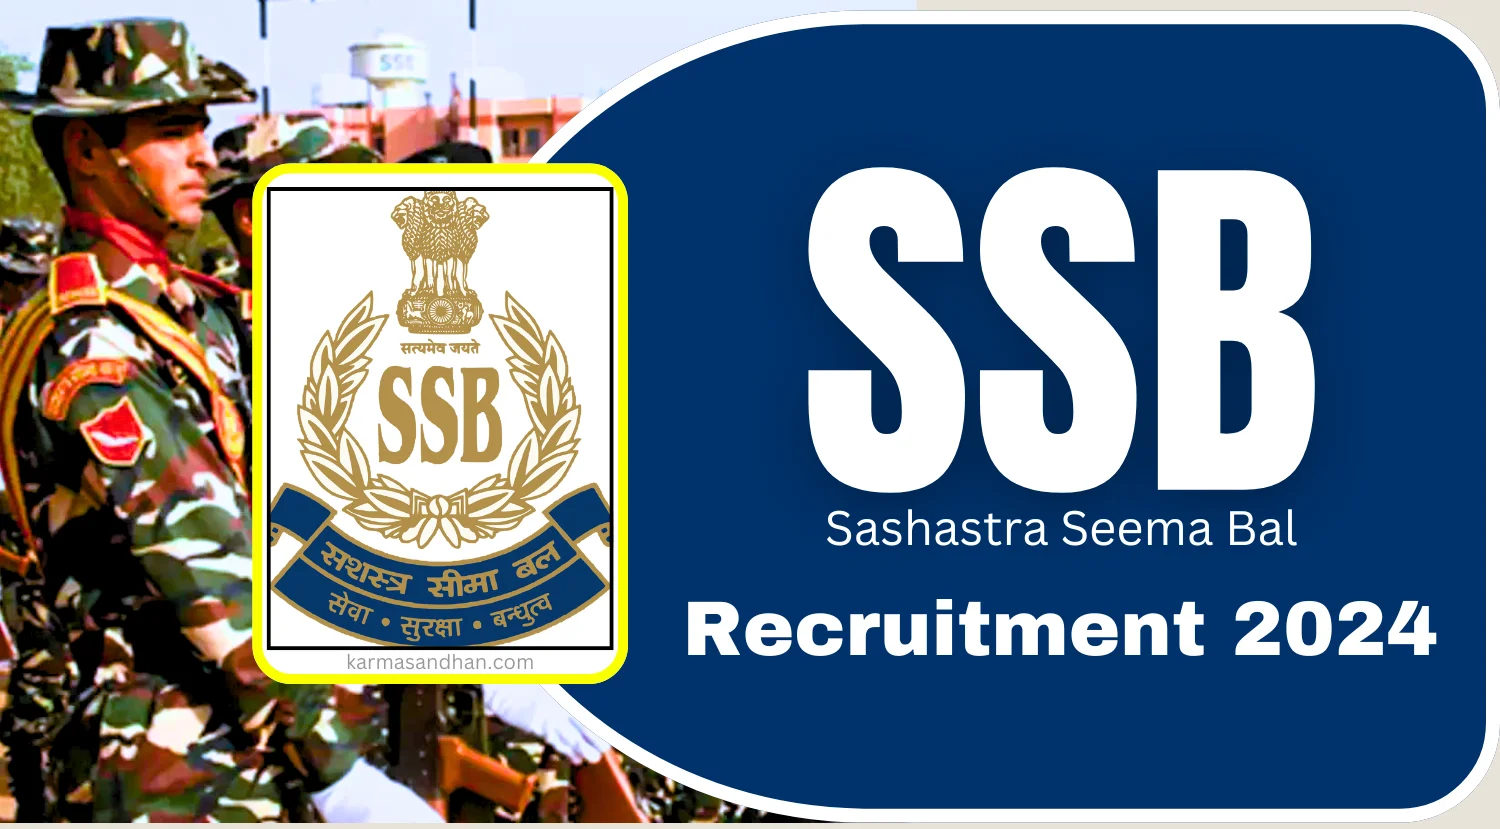 SSB Recruitment 2024 Notification Out